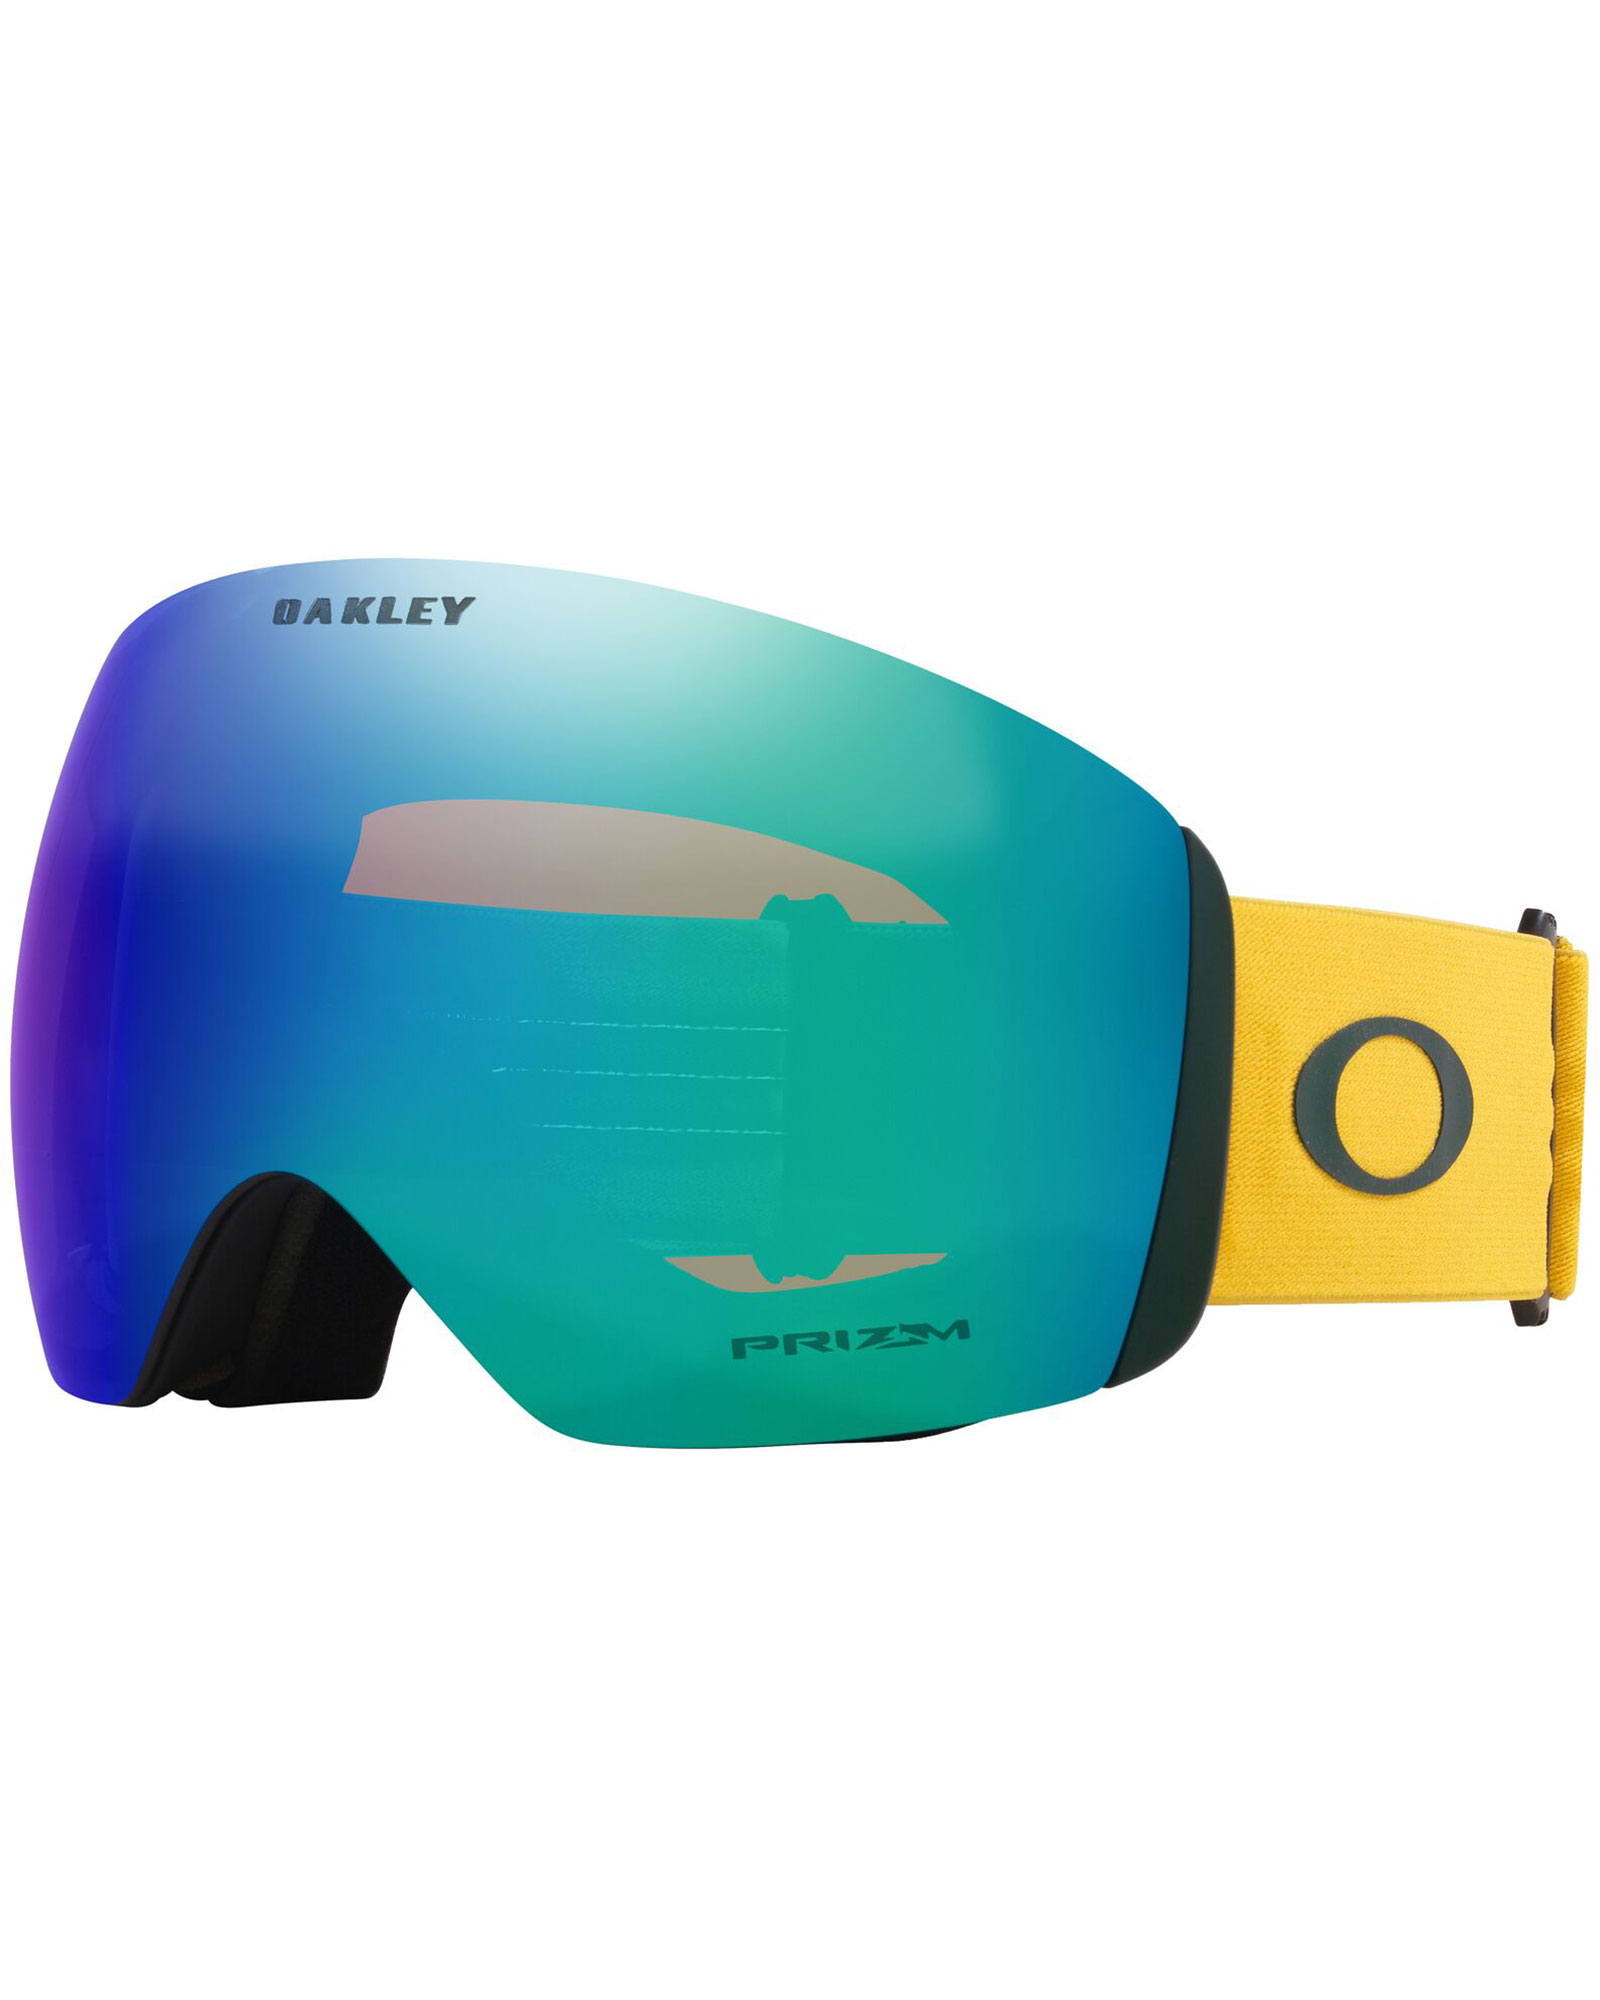 Oakley Flight Deck L Gold / Prizm Argon Iridium Goggles